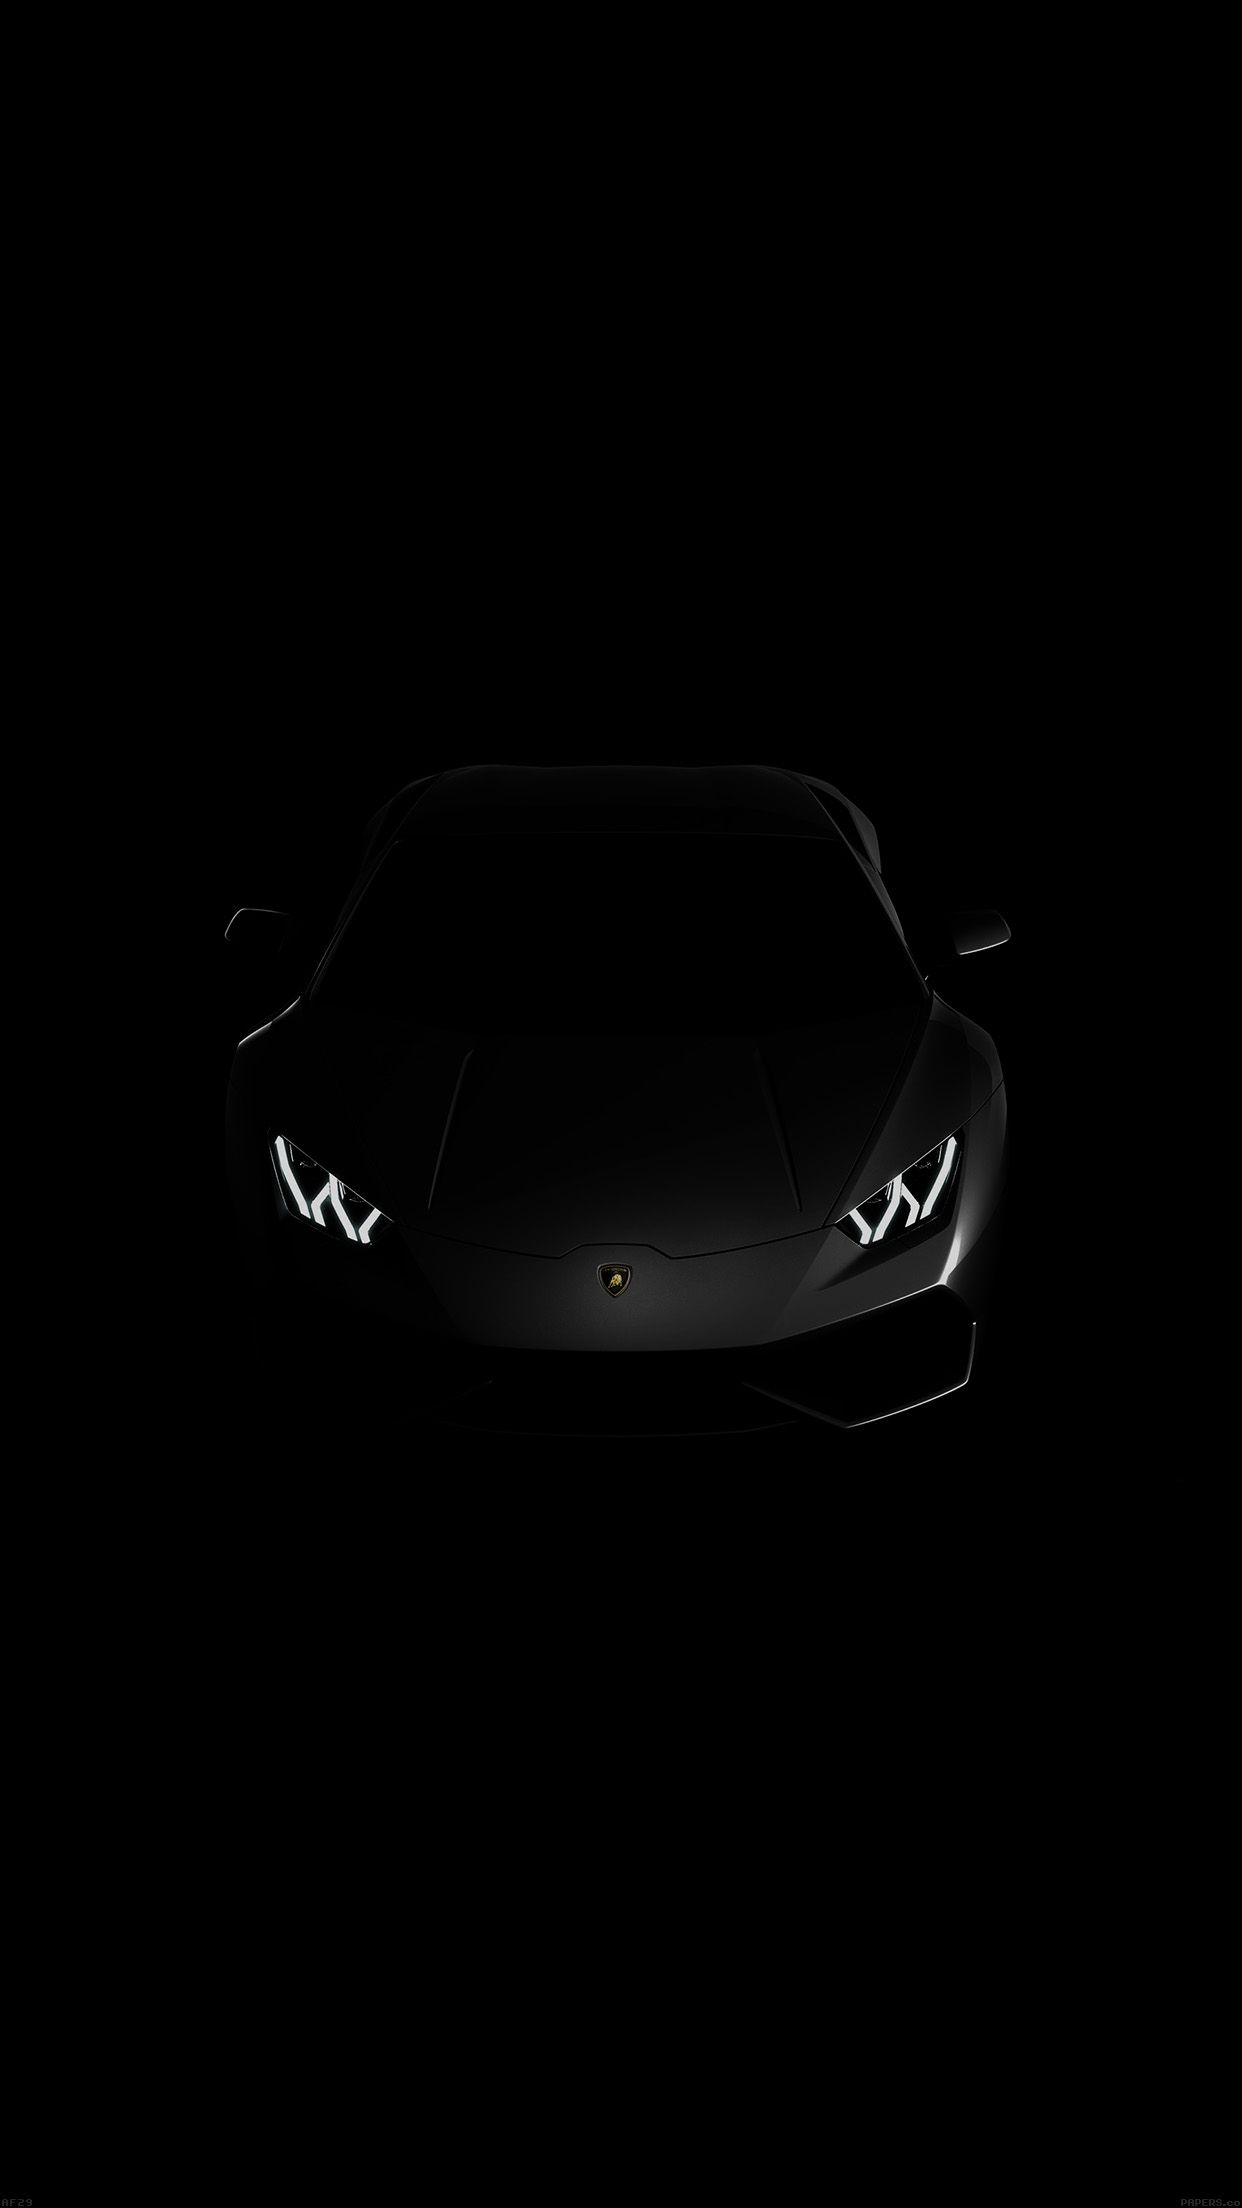 Lamborghini Logo Iphone Wallpapers